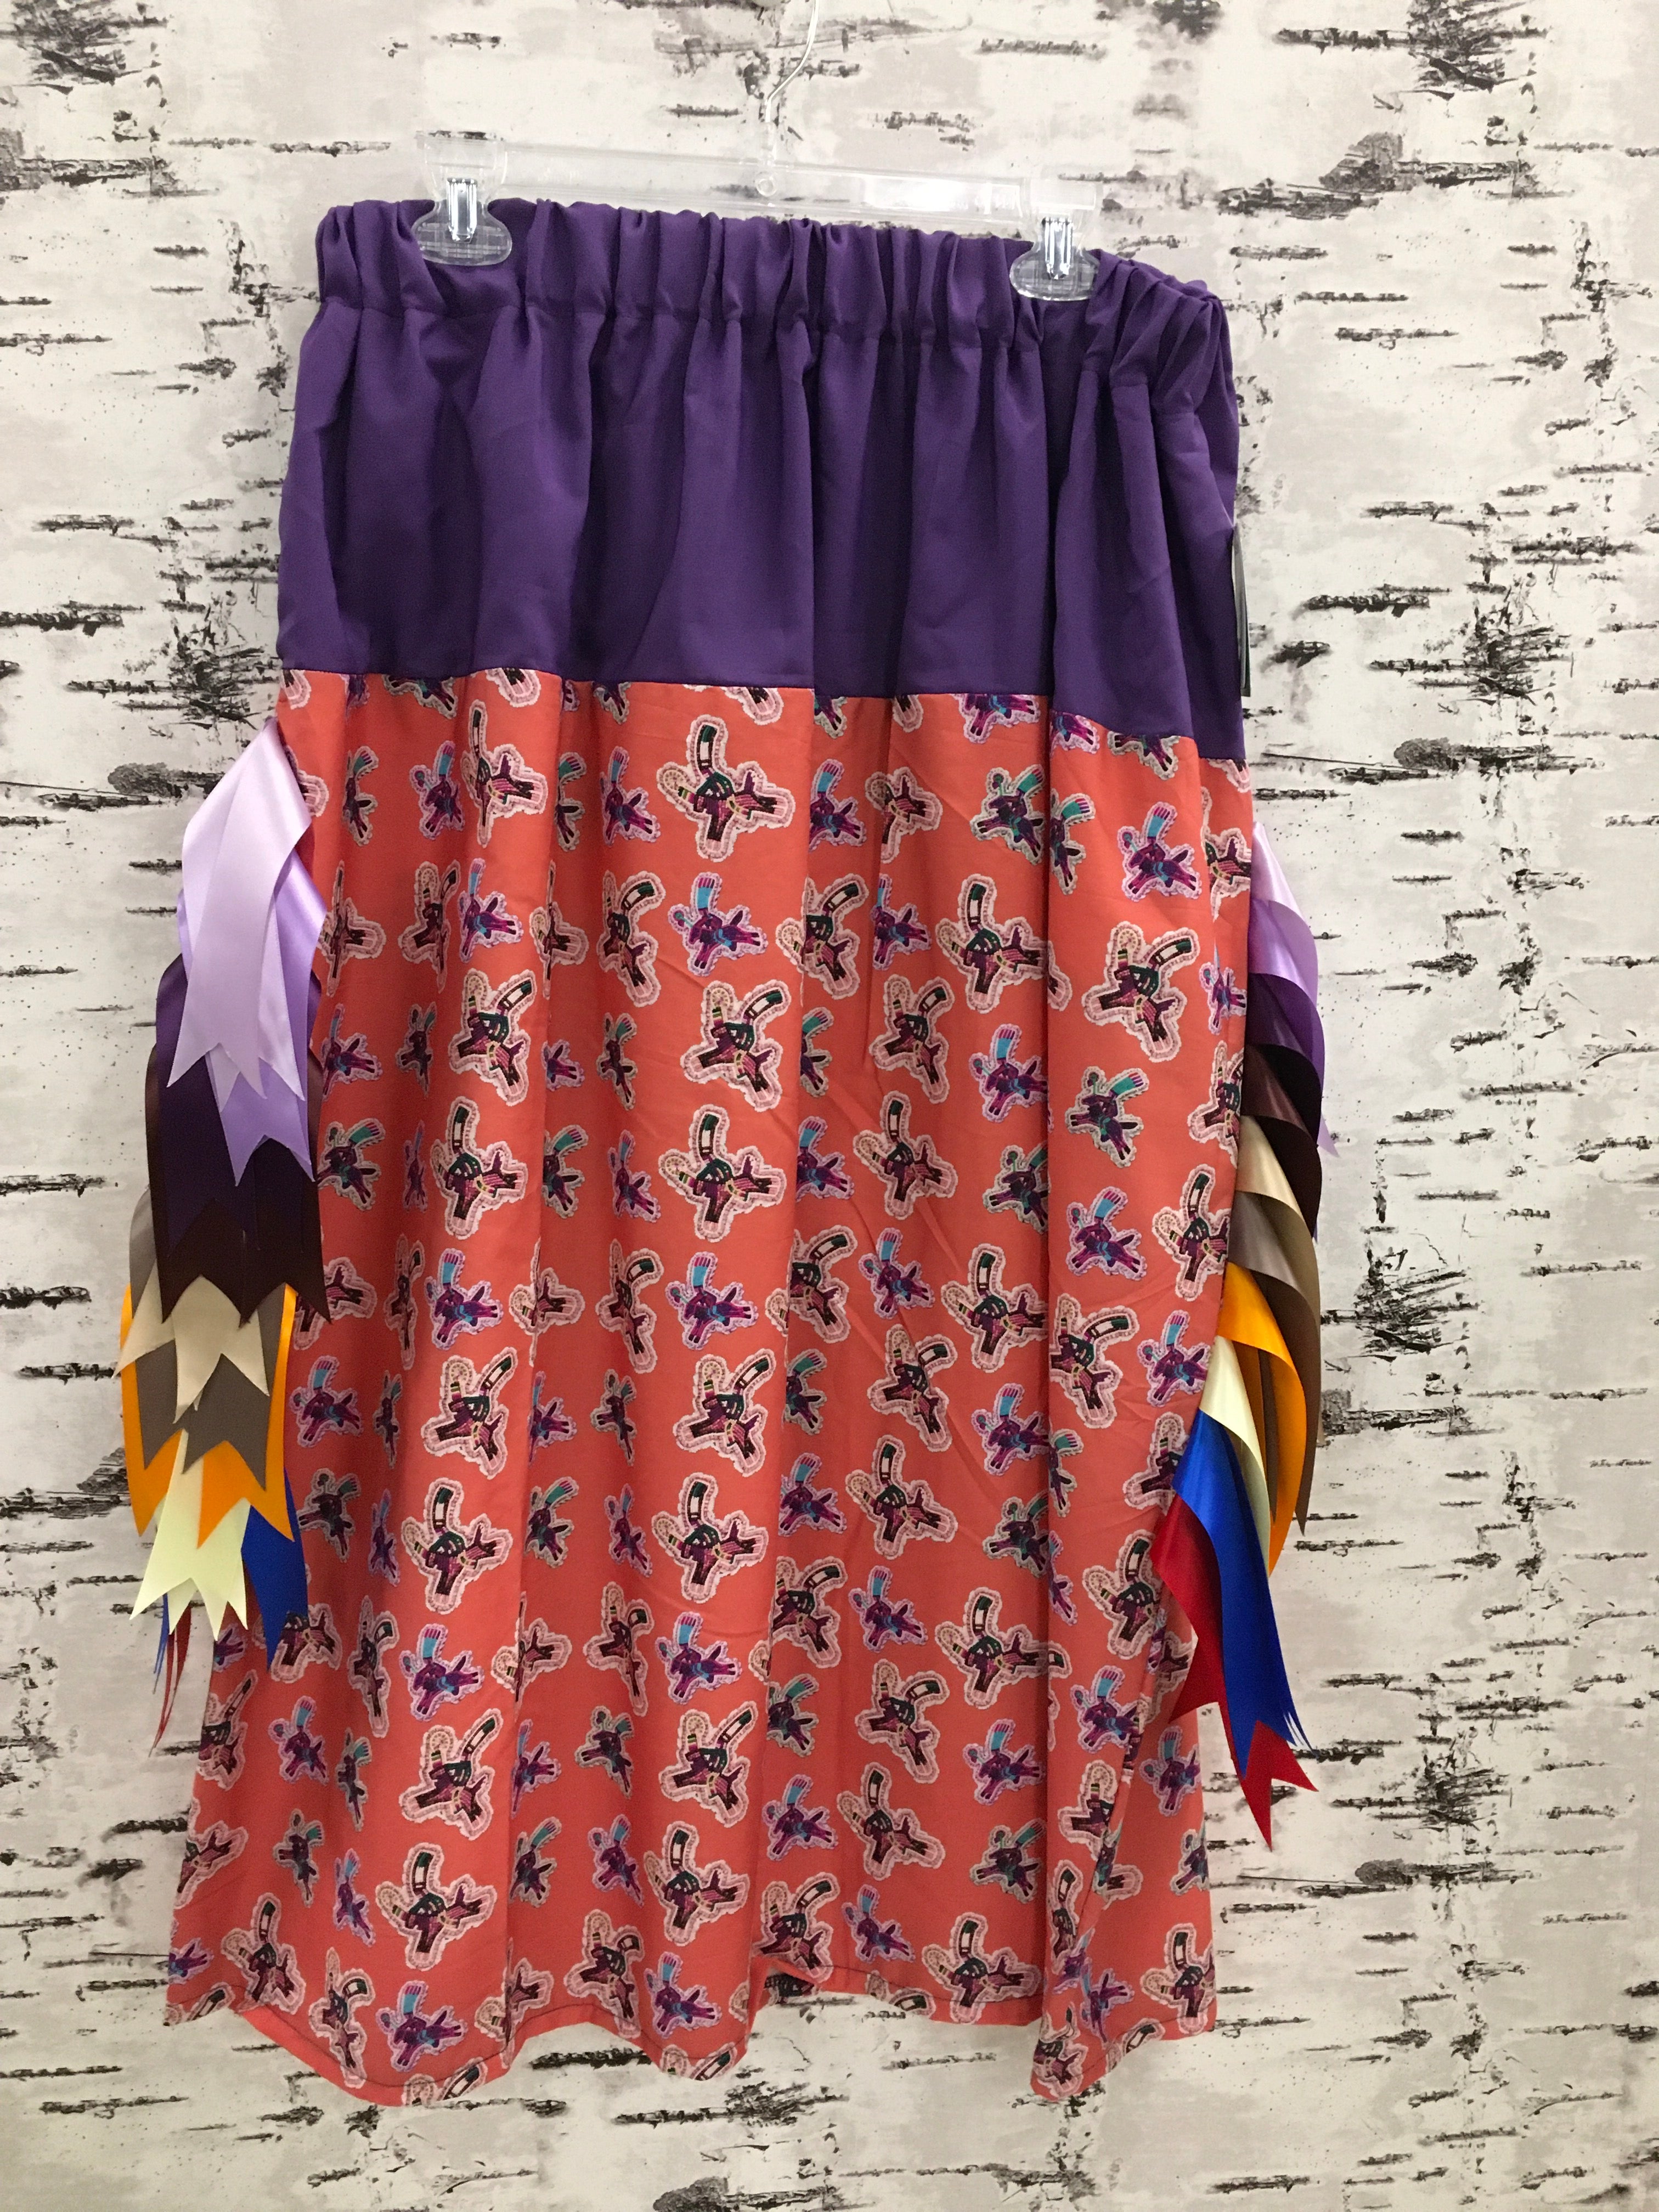 Handmade Ryders with Purple Top Ribbon Skirt